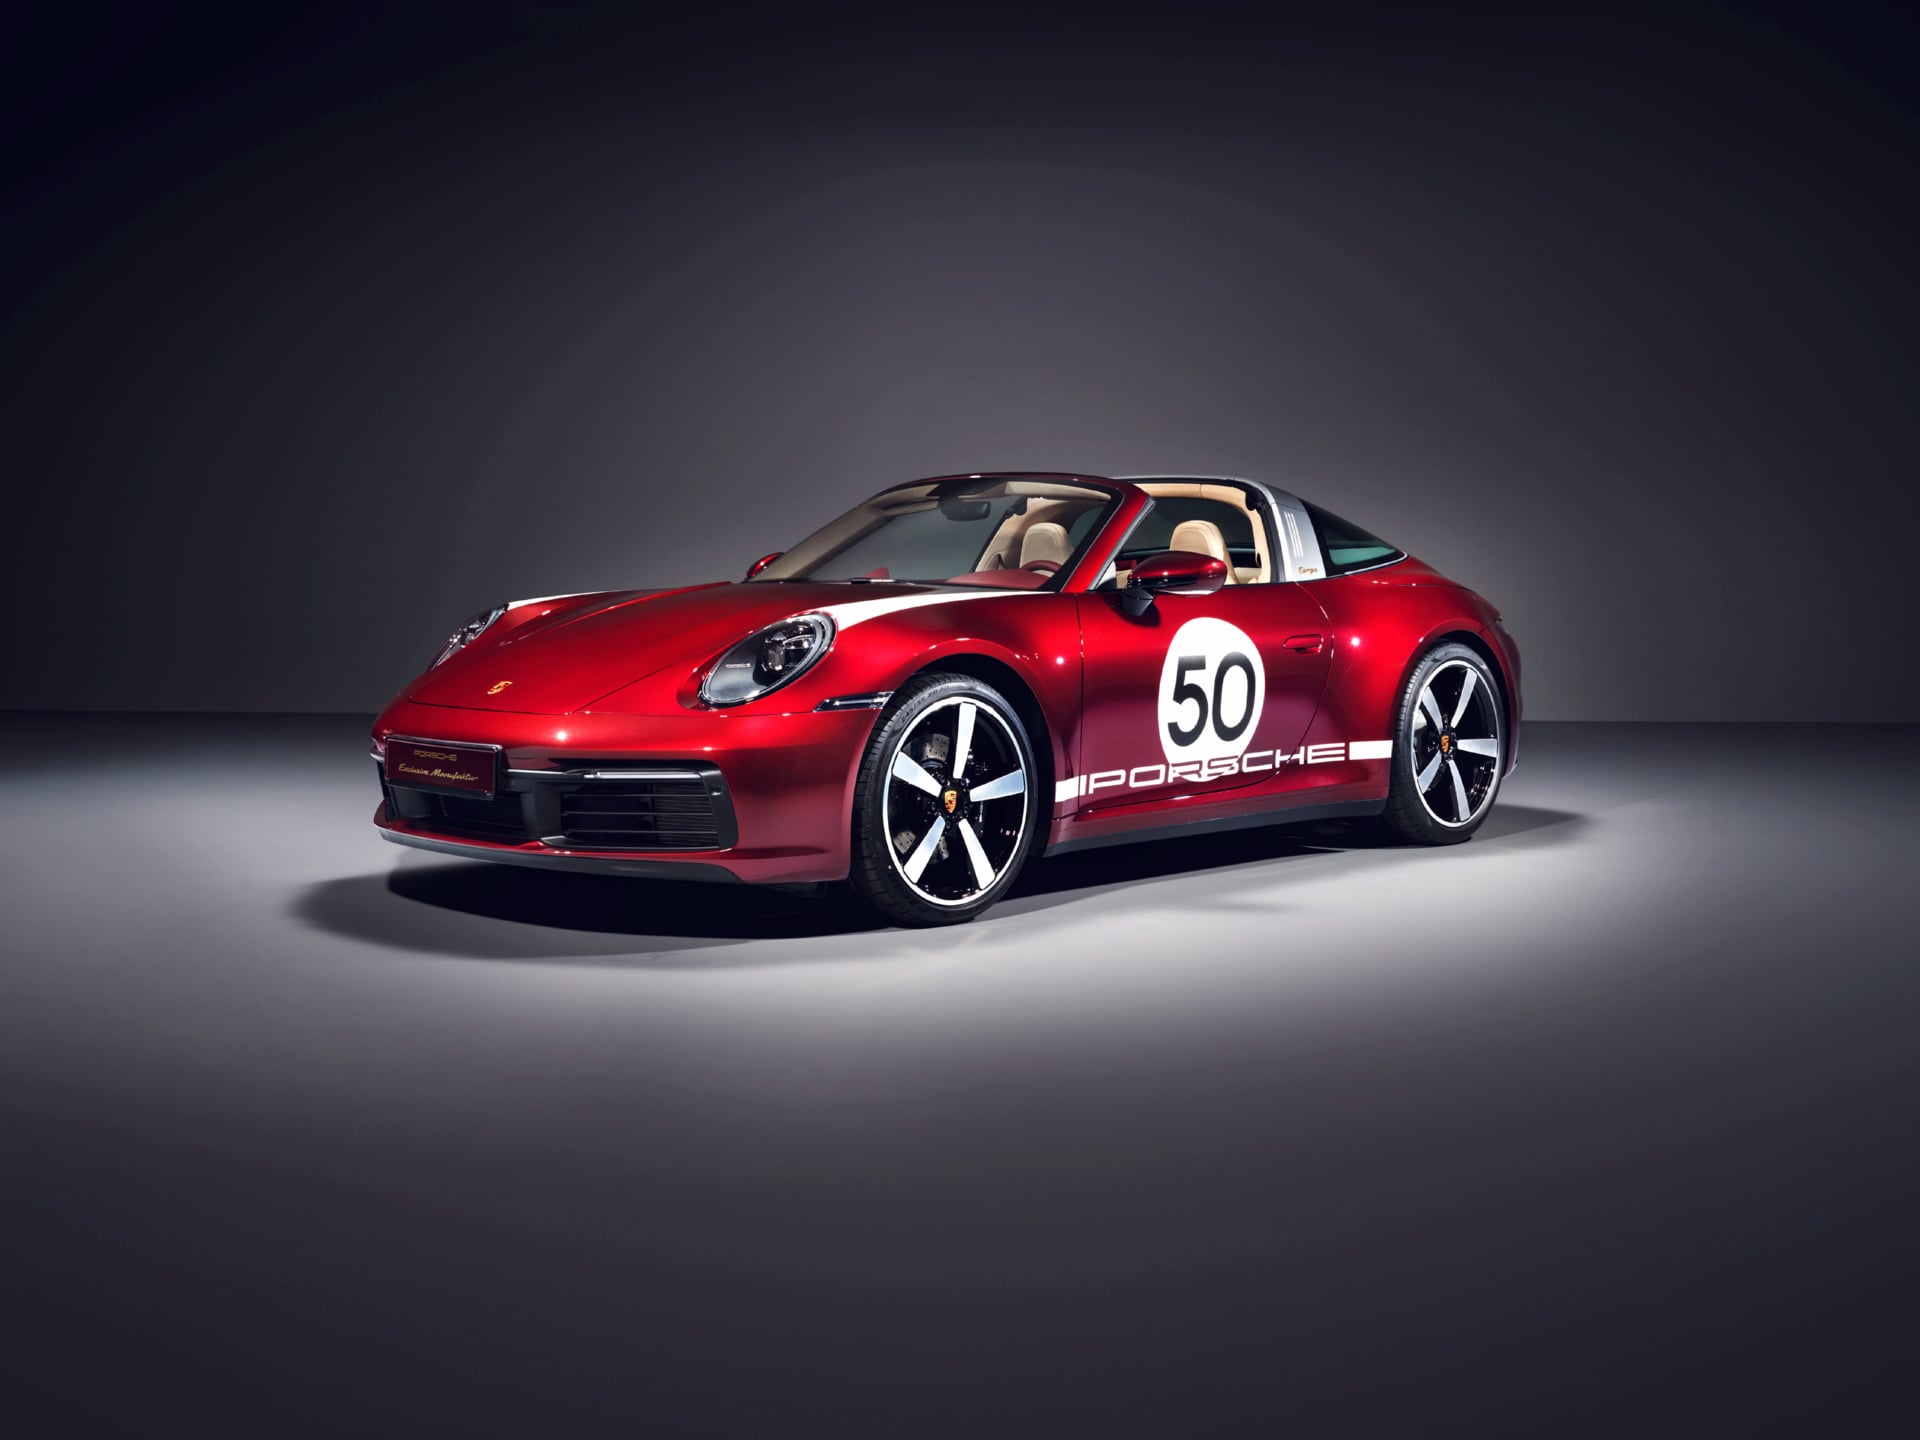 Porsche 911 Targa 4S at 1024 x 768 size wallpapers HD quality